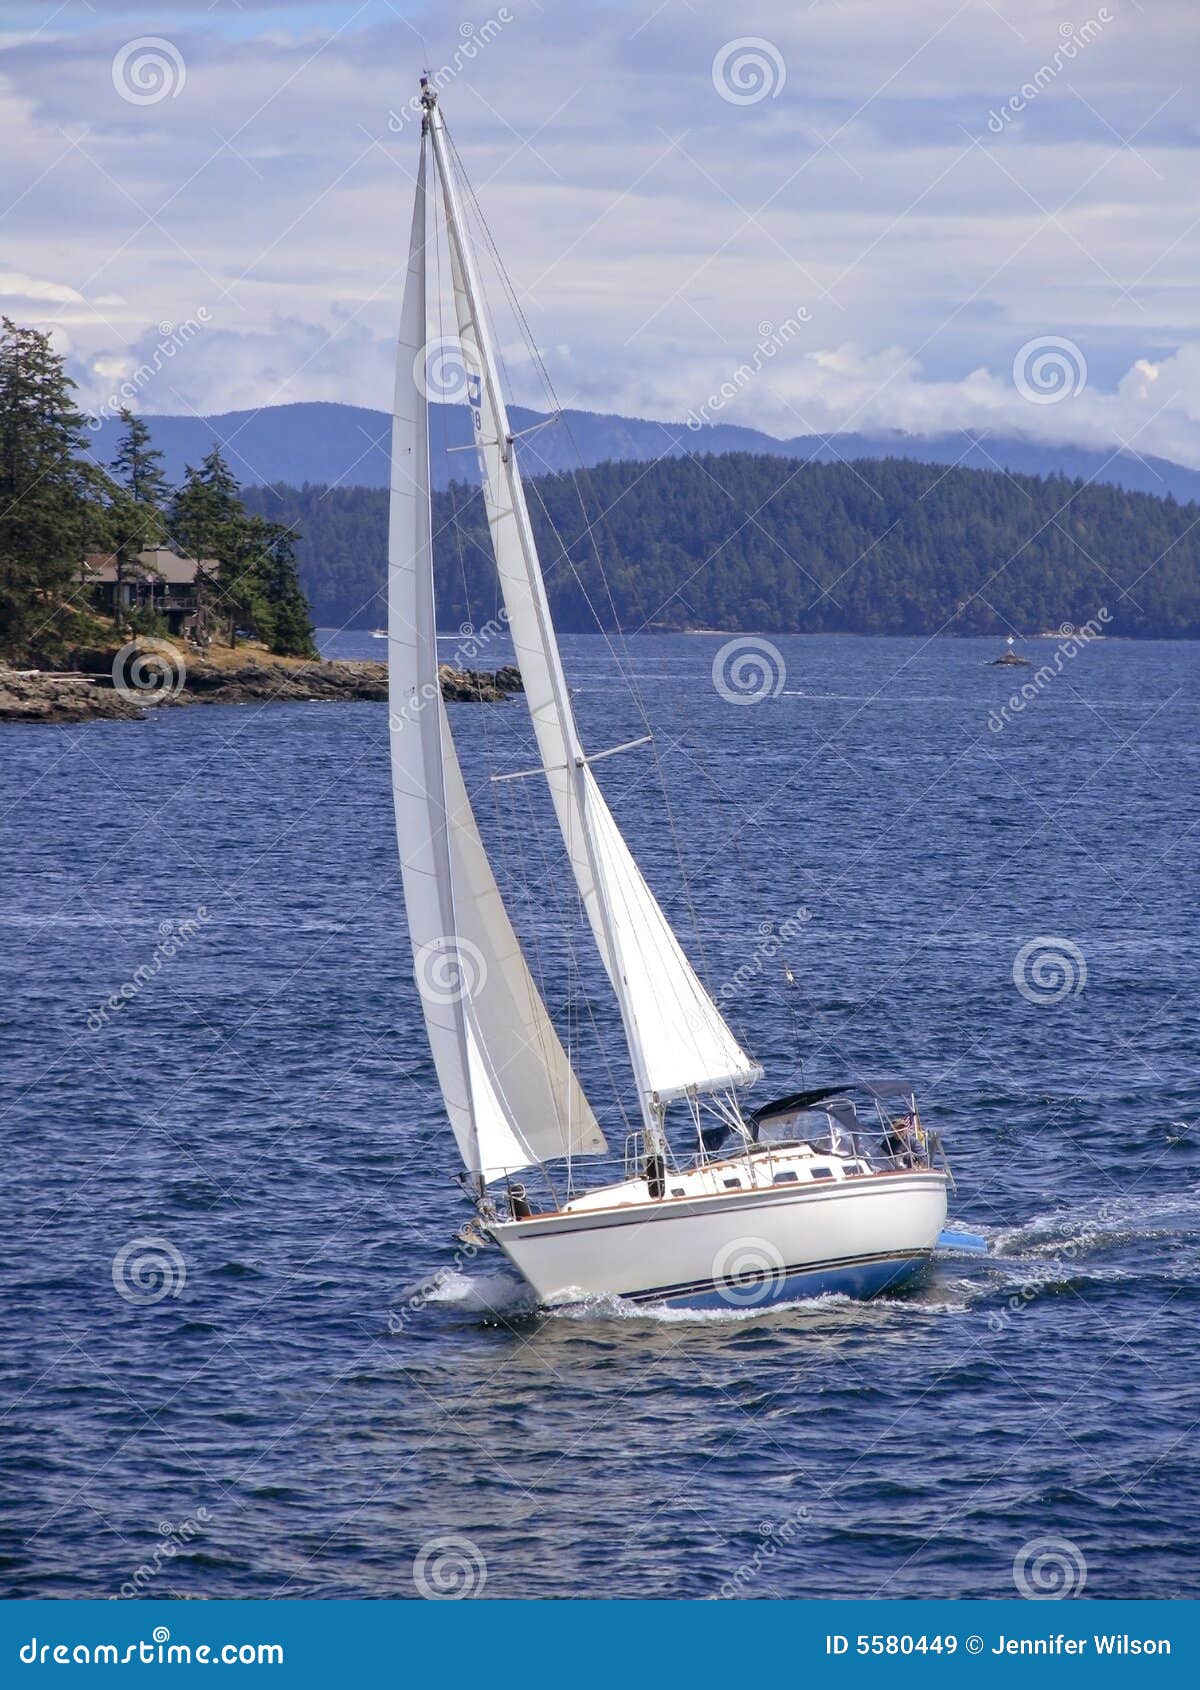 sailing the puget sound